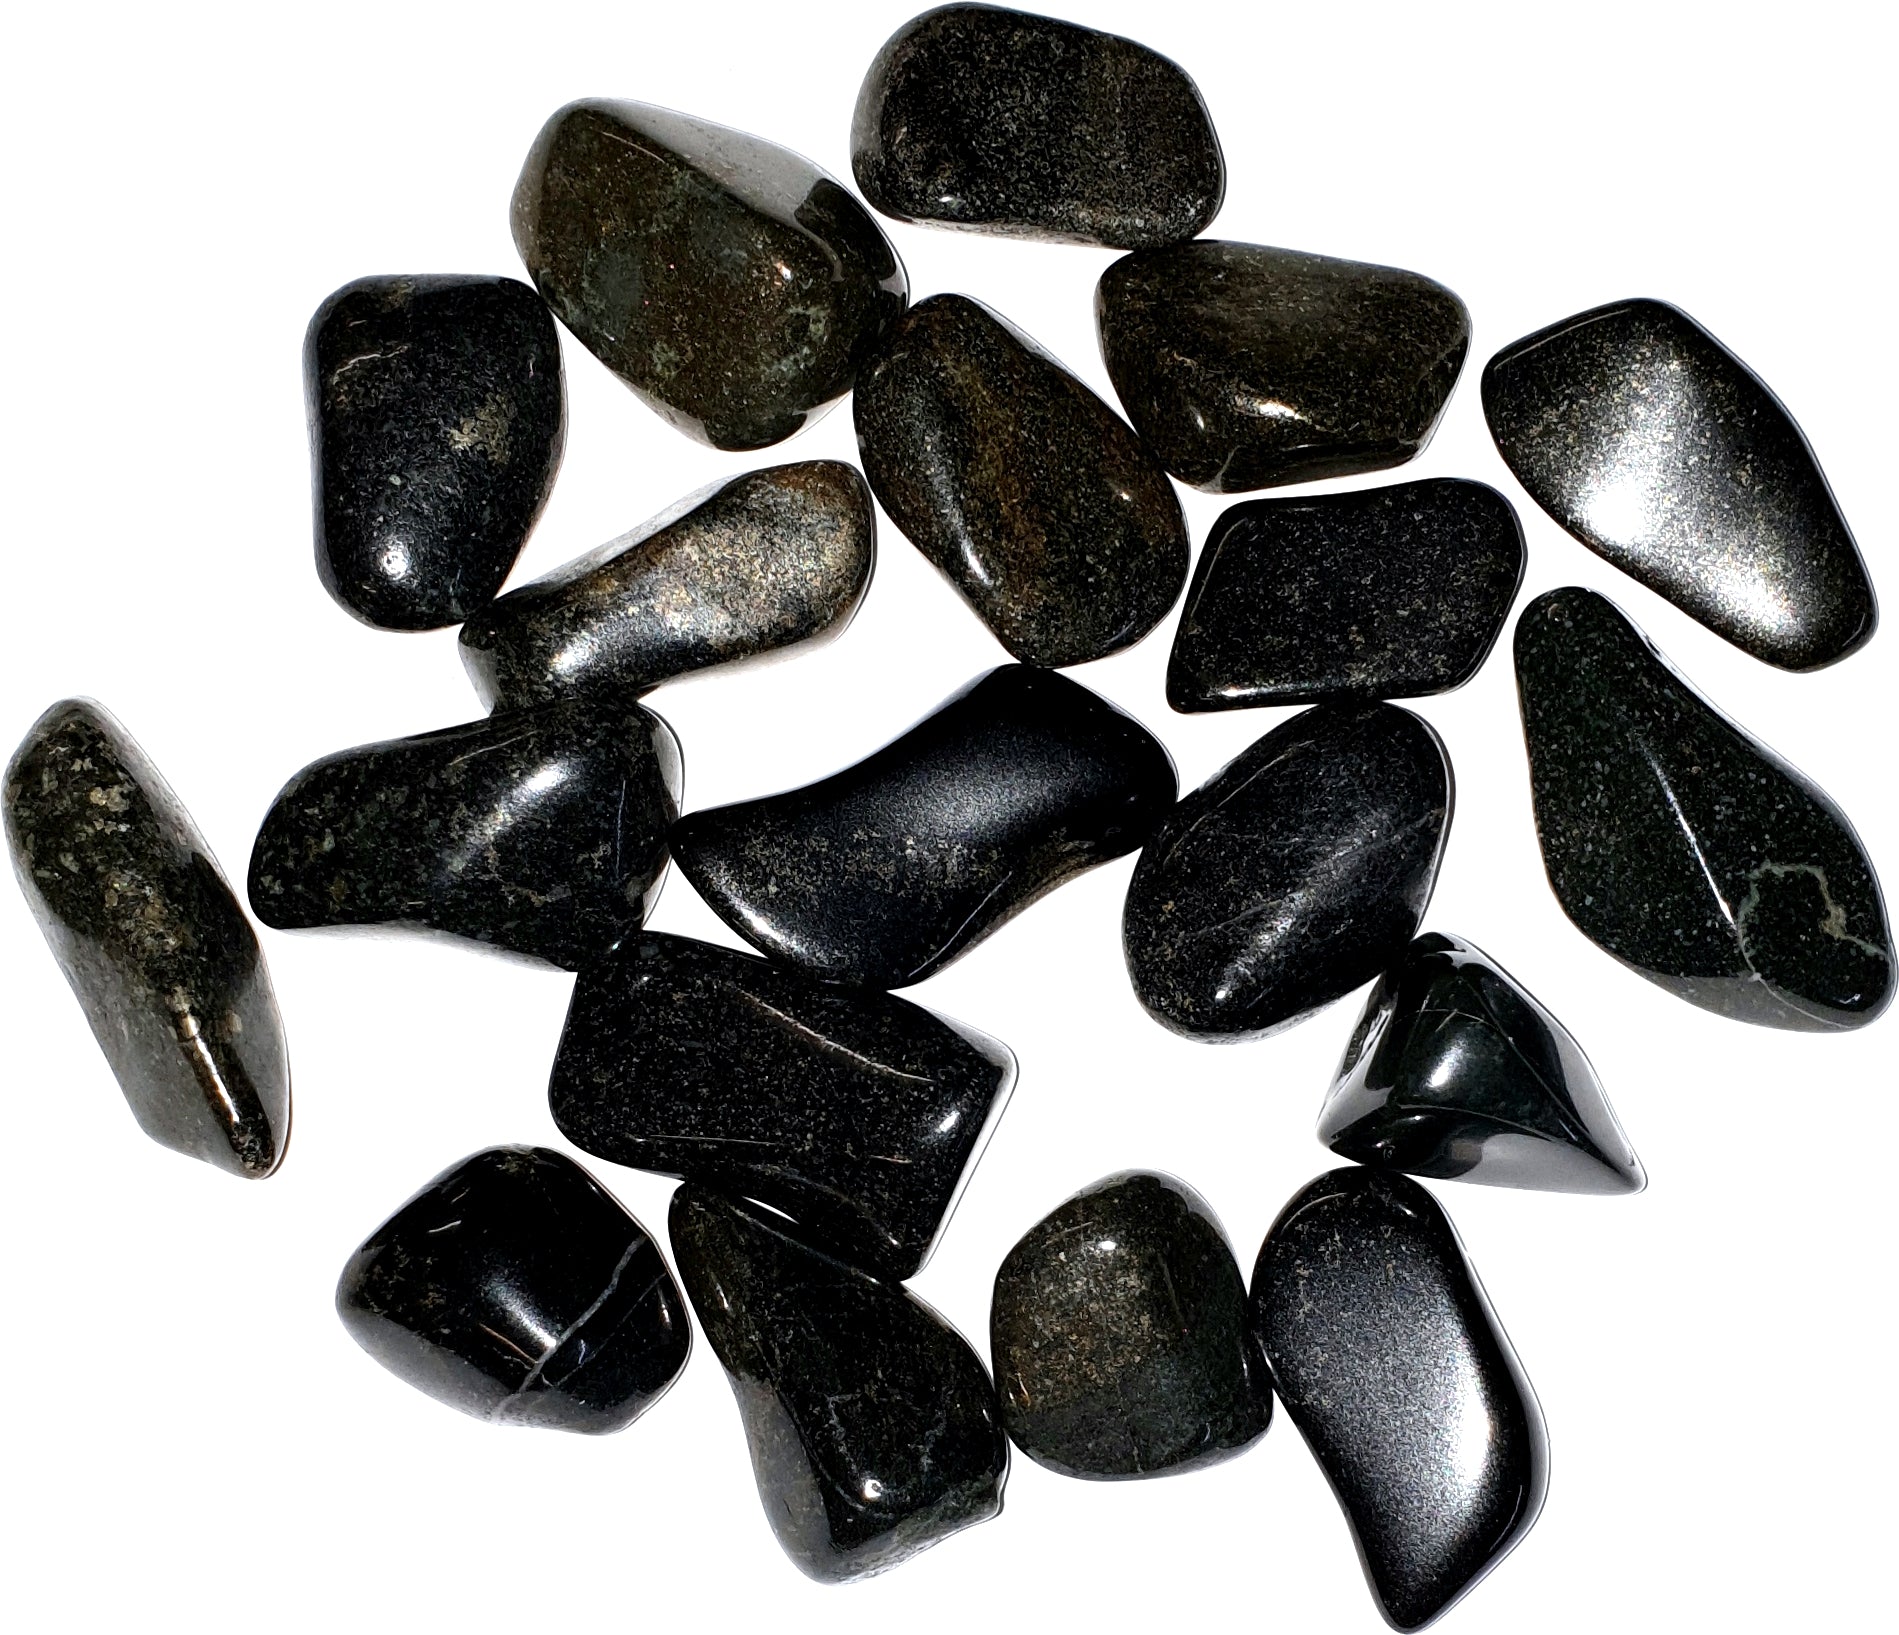 Black Jade Polished Healing Crystal Tumble Stone